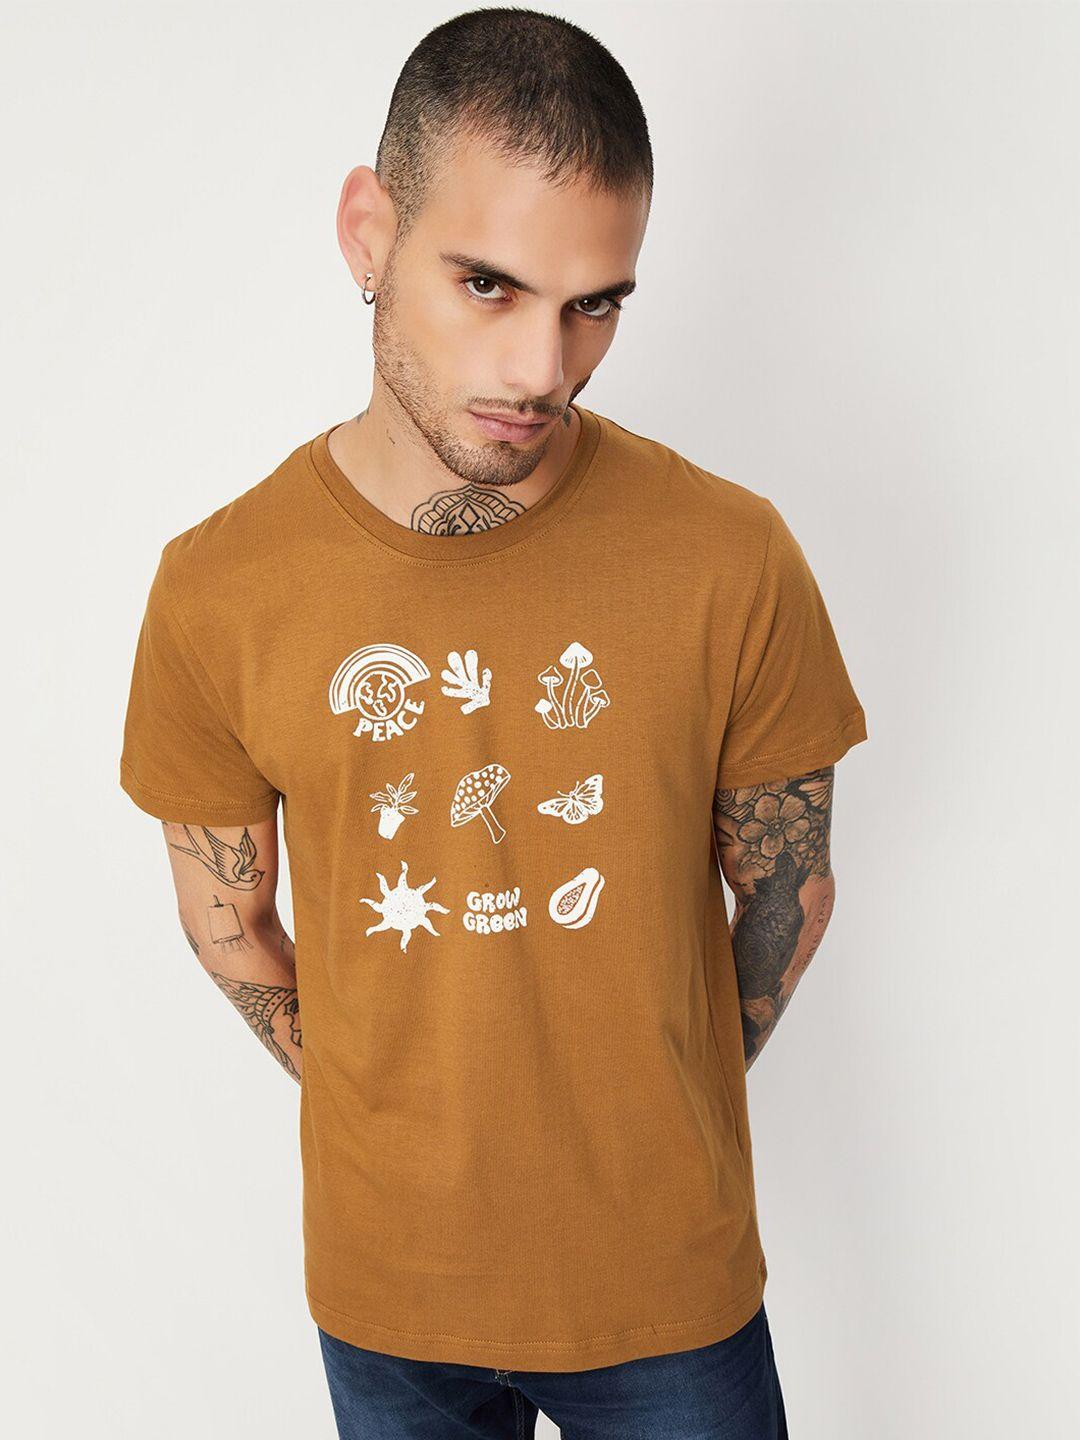 max-conversational-printed-round-neck-pure-cotton-t-shirt